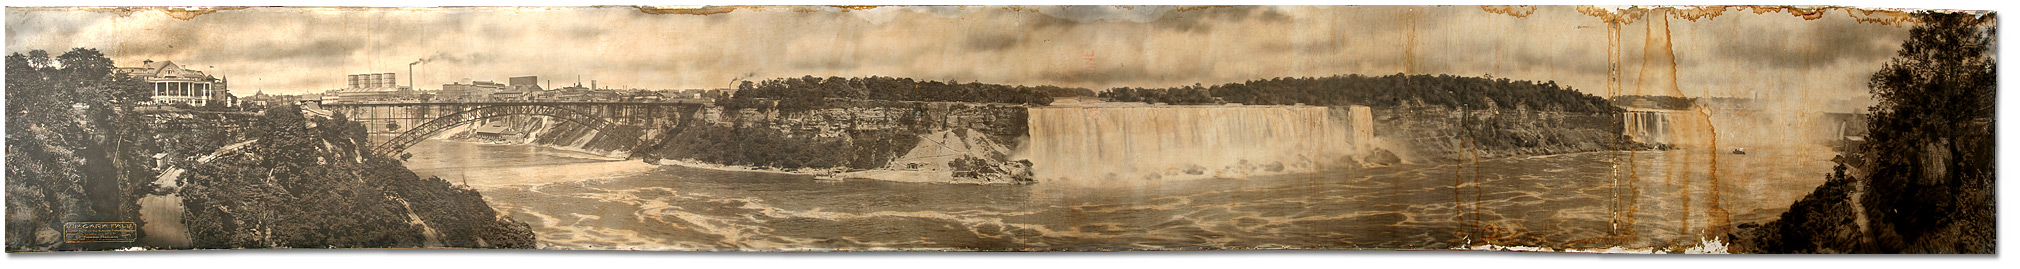 Photo: Wm. Thomson Freeland Panoramas - Niagara Falls Summer Panorama